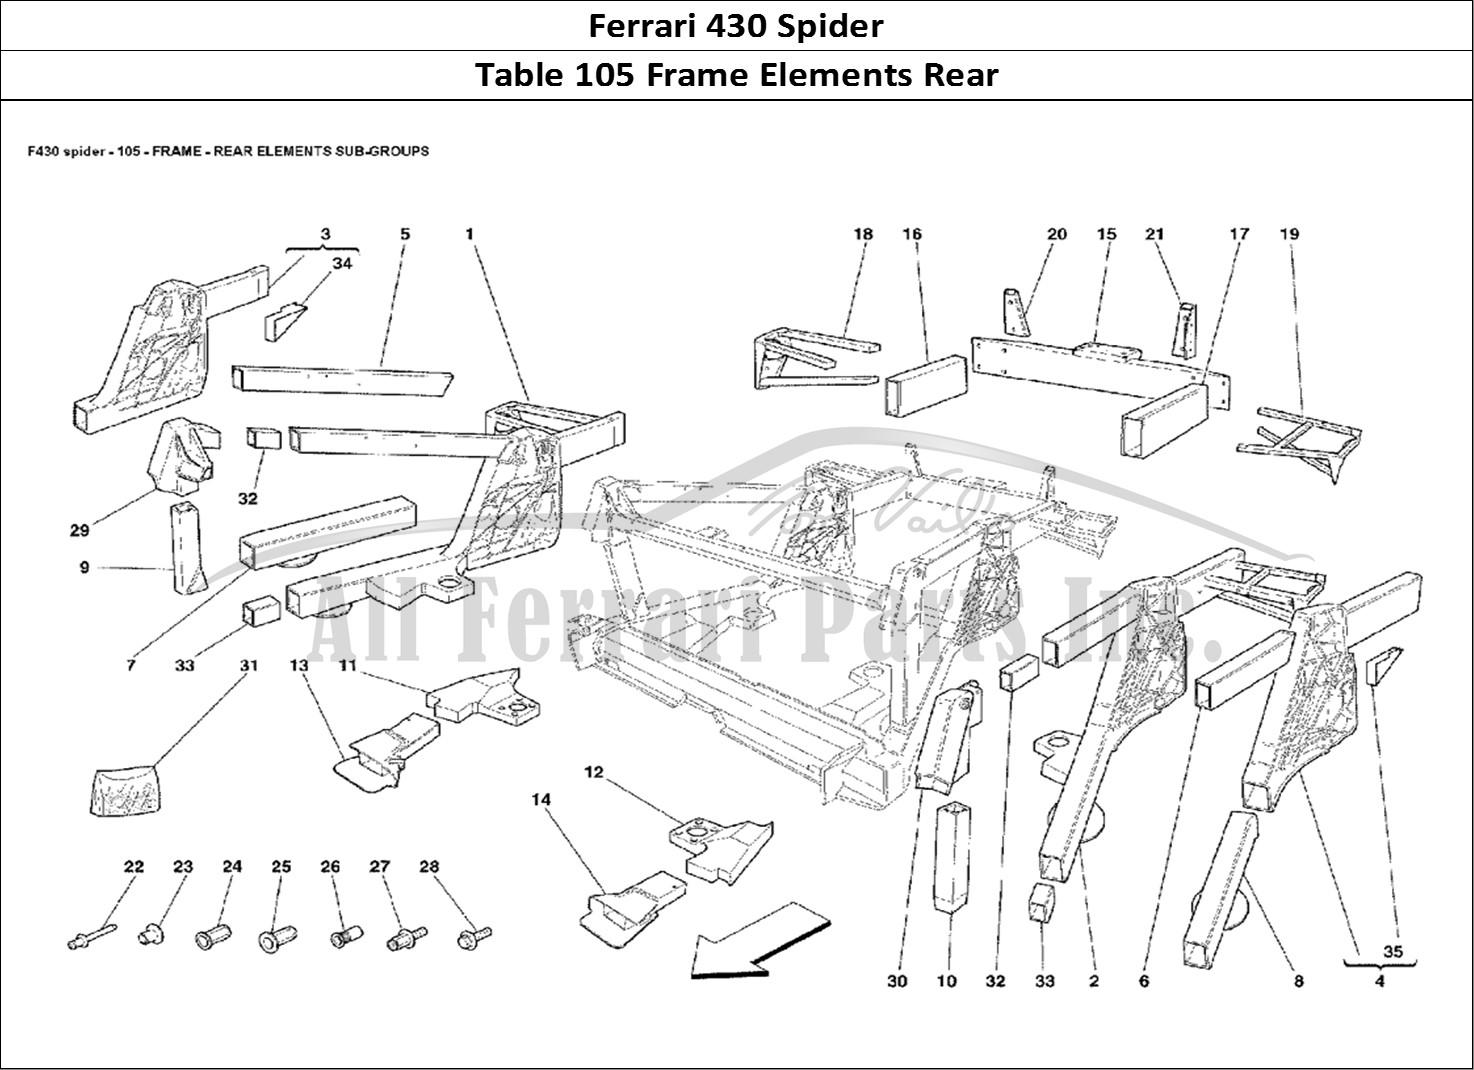 Ferrari Parts Ferrari 430 Spider Page 105 Frame - Rear Elements Sub